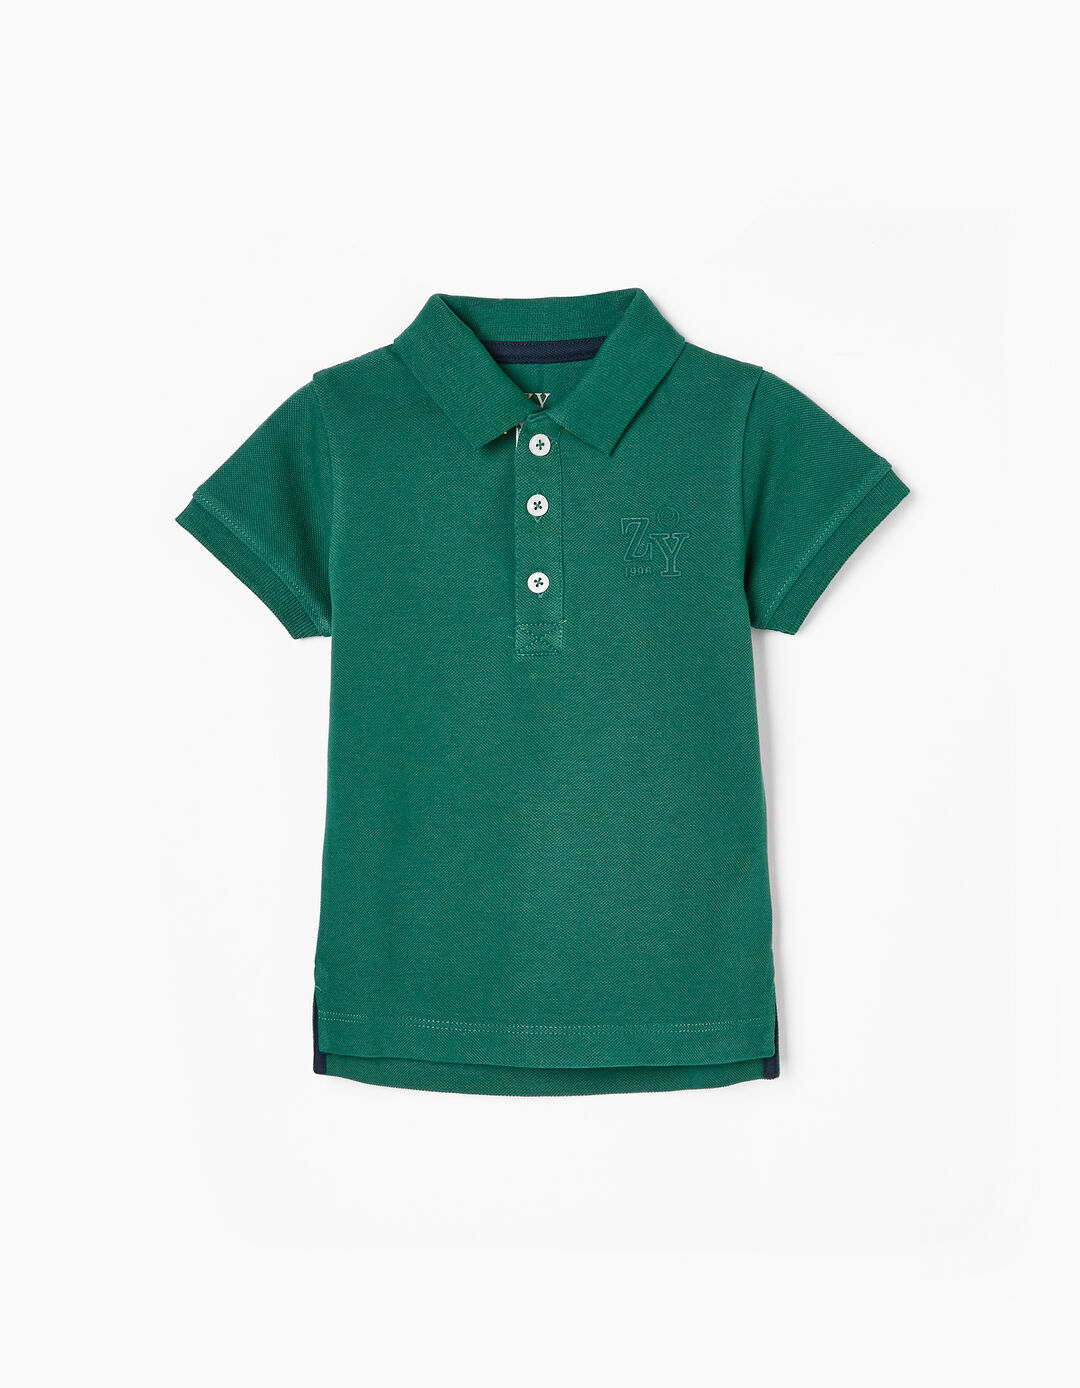 Cotton Polo Shirt for Baby Boys 'ZY 96', Green